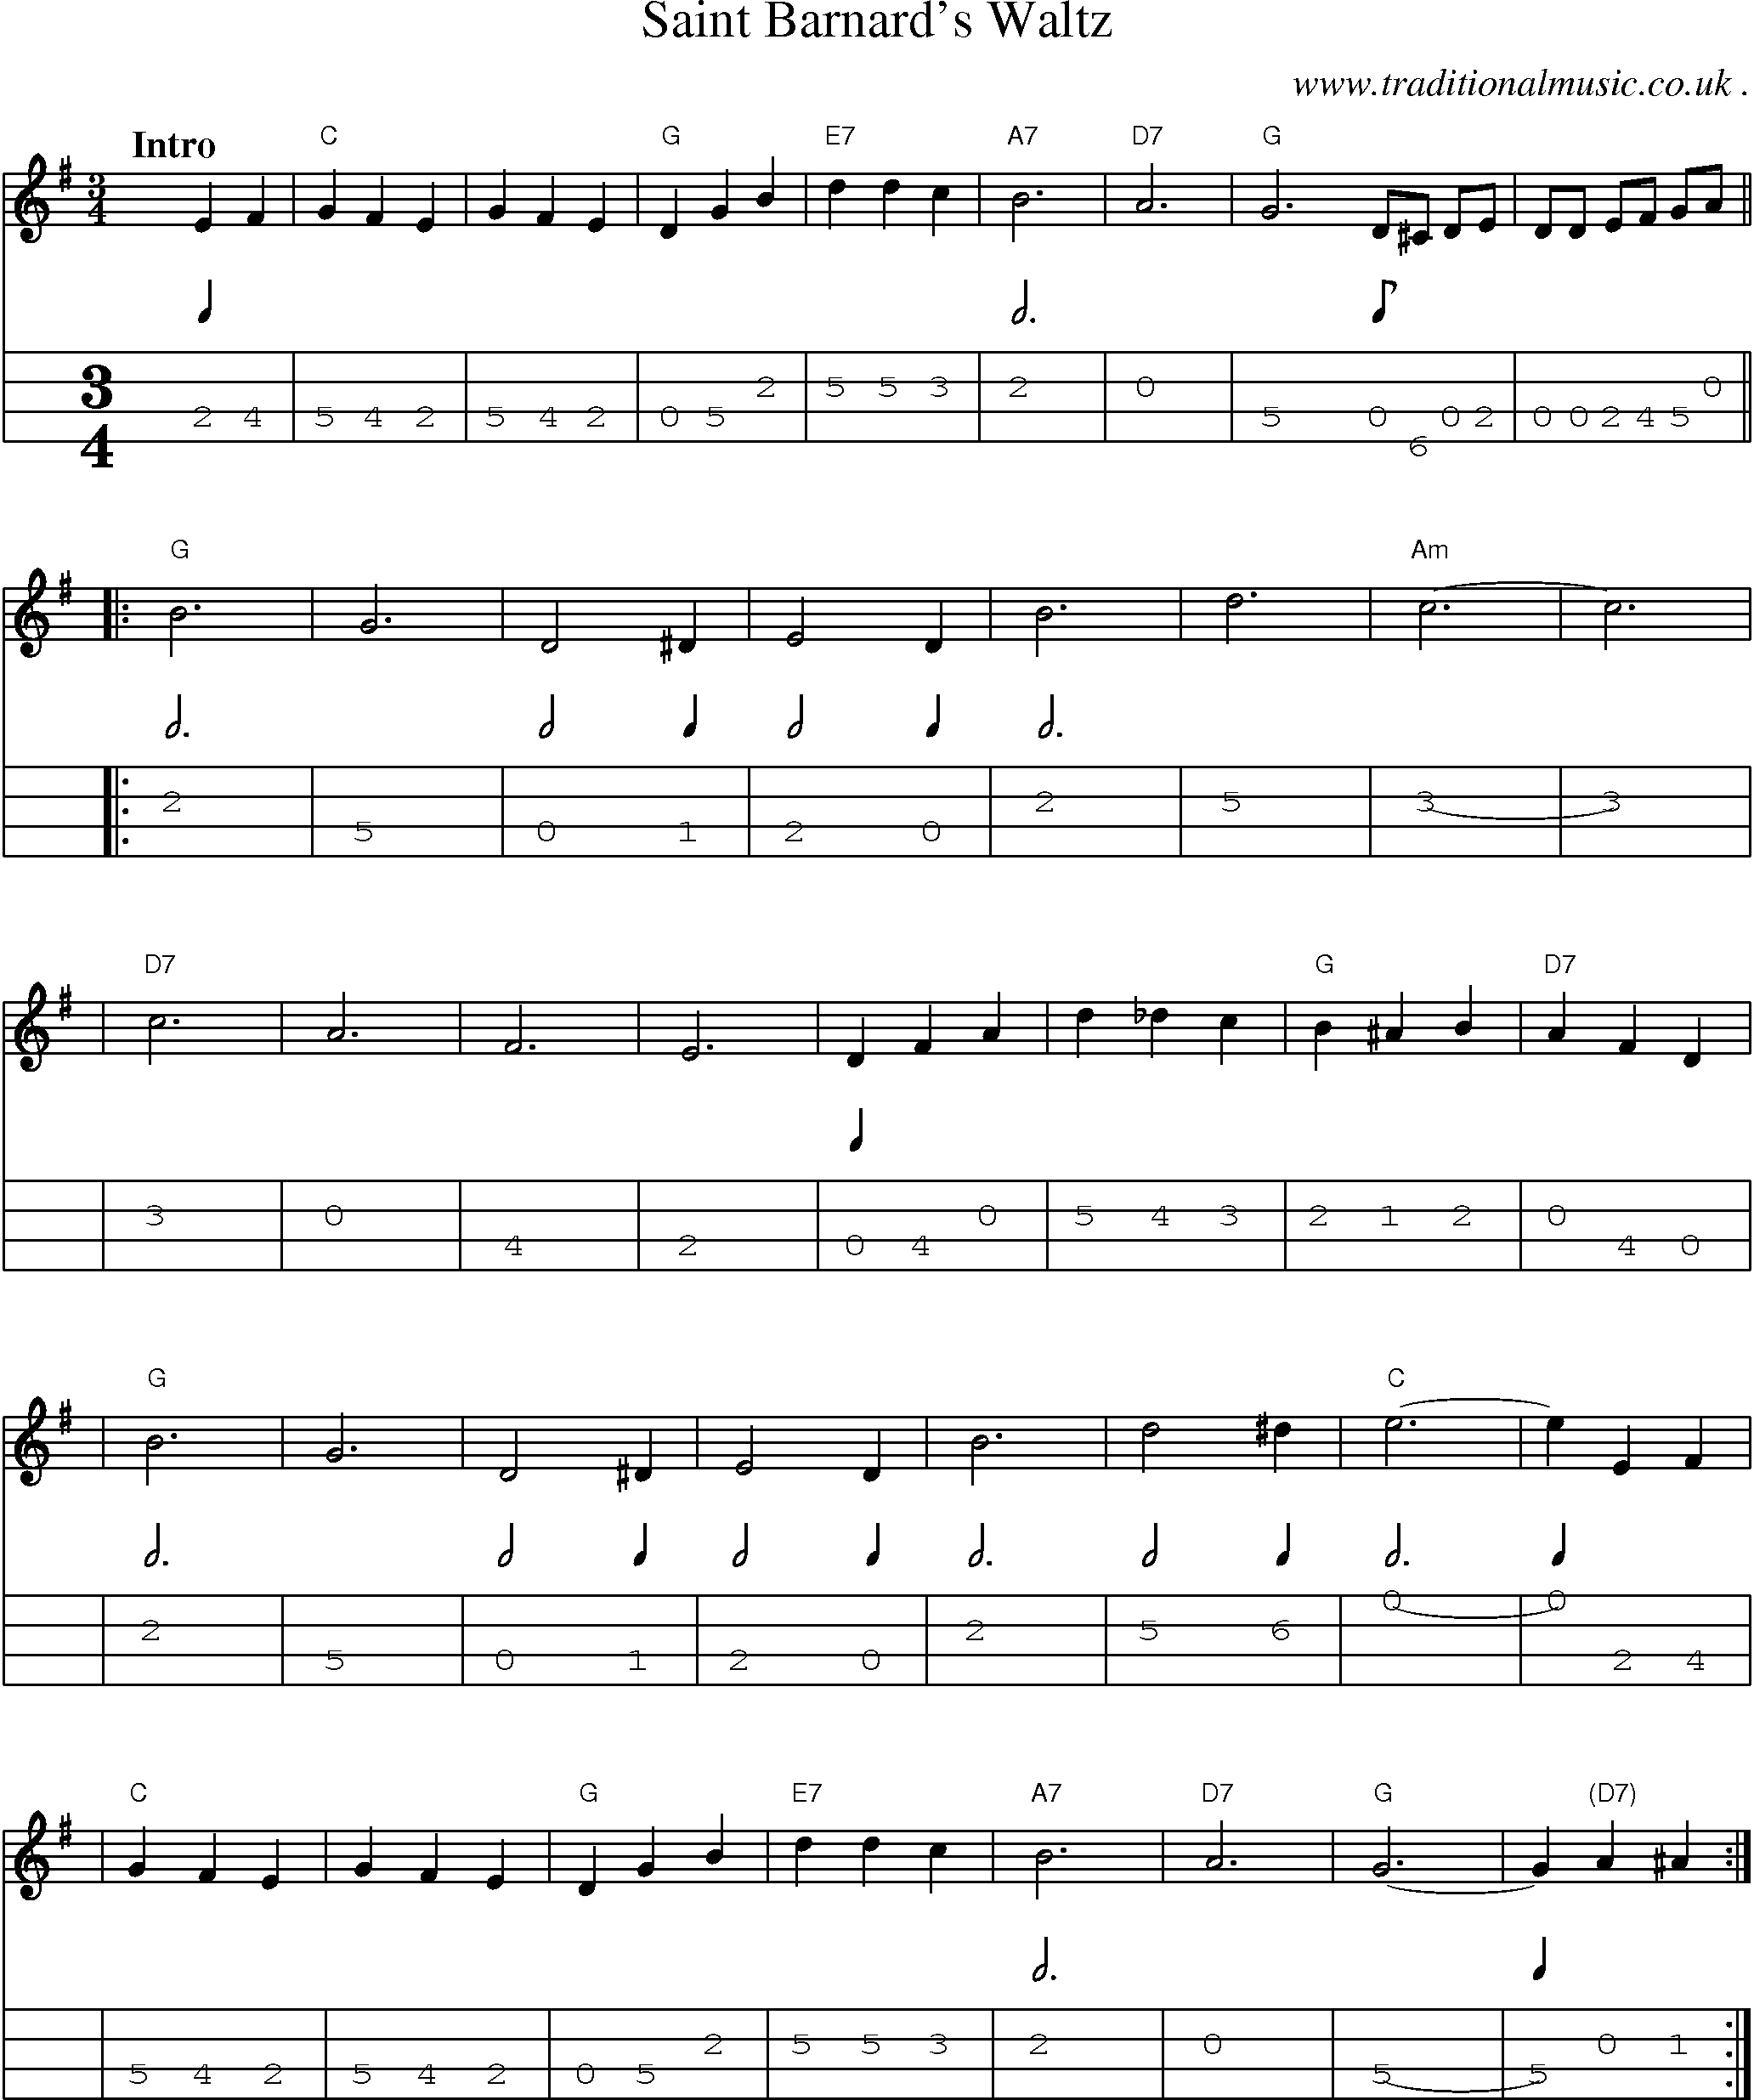 Sheet-music  score, Chords and Mandolin Tabs for Saint Barnards Waltz